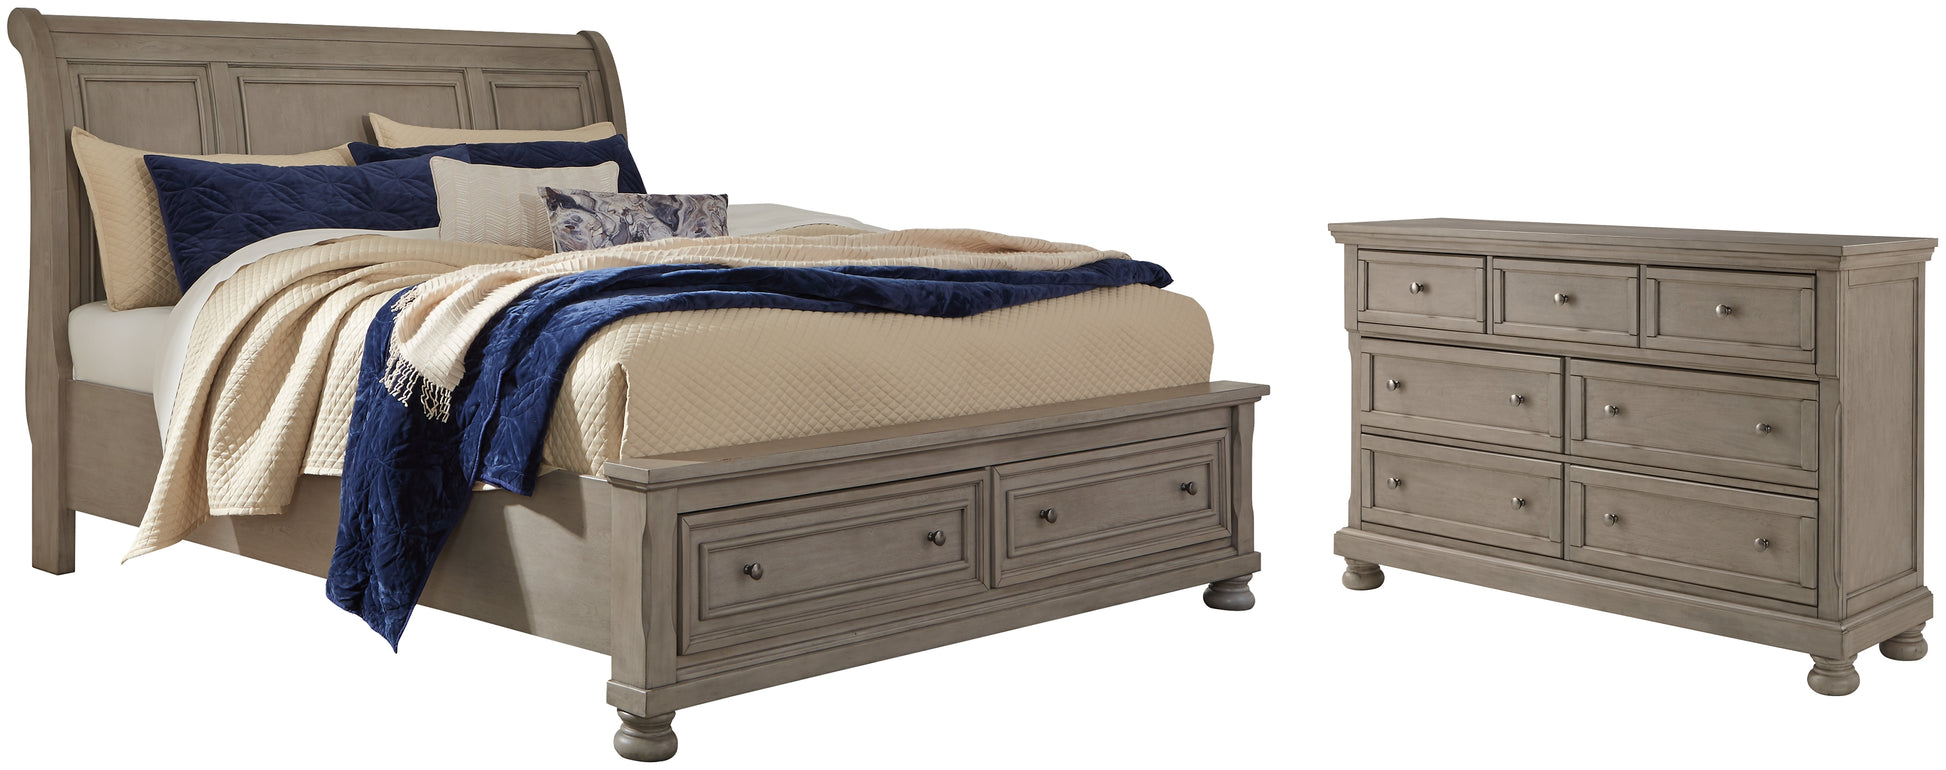 Lettner Queen Sleigh Bed with 2 Storage Drawers with Dresser with Dresser Wilson Furniture (OH)  in Bridgeport, Ohio. Serving Bridgeport, Yorkville, Bellaire, & Avondale